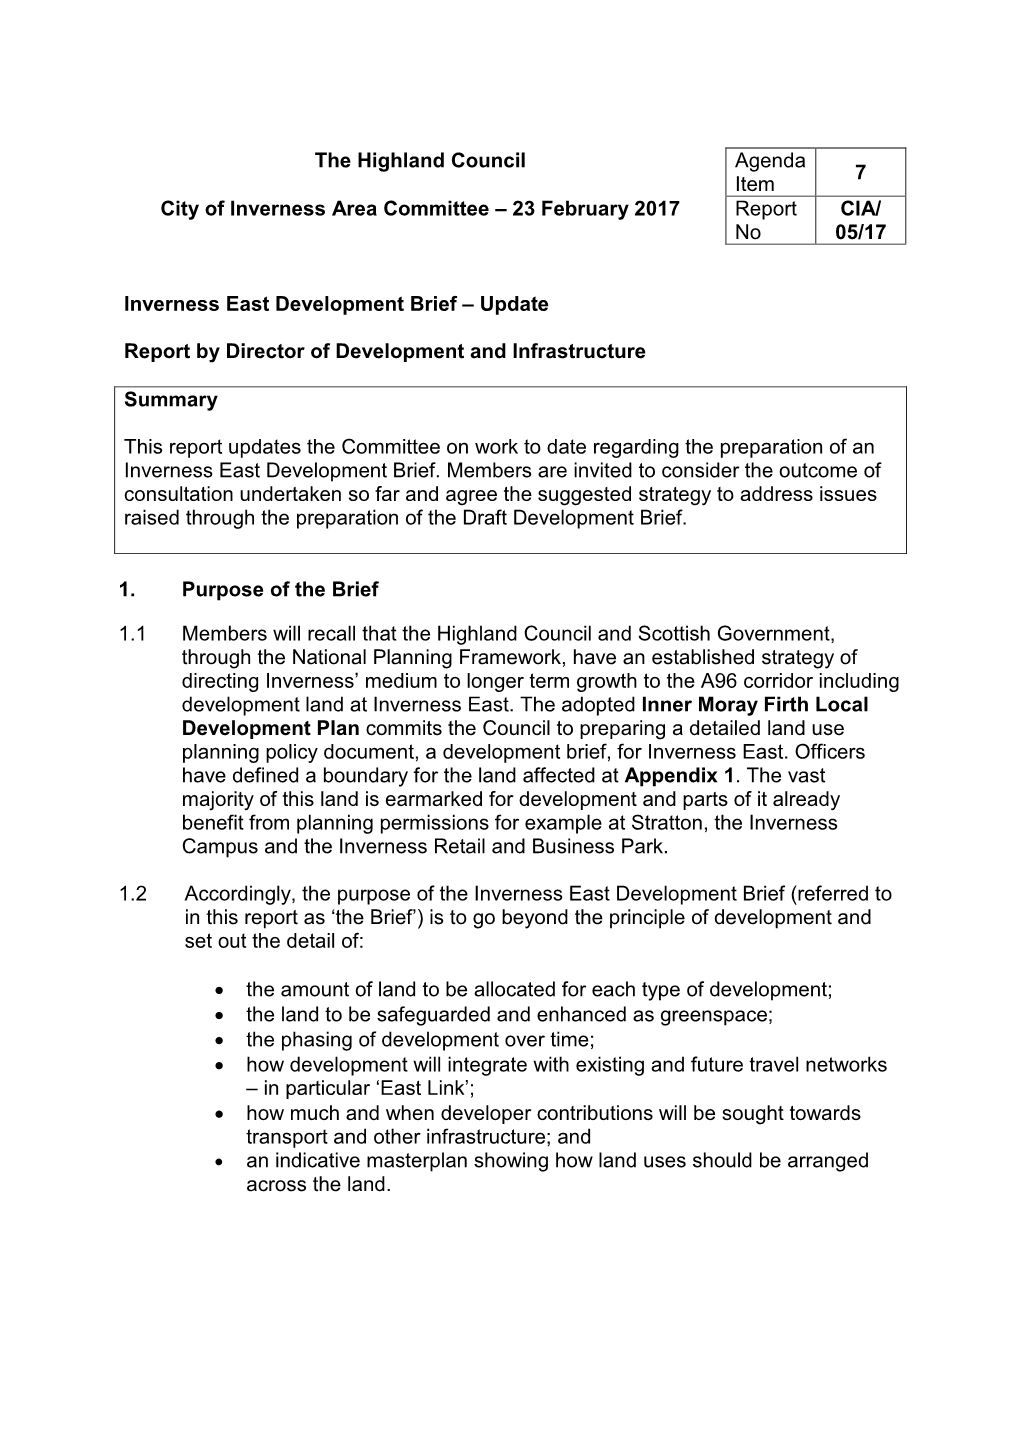 Item 7 Inverness East Development Brief